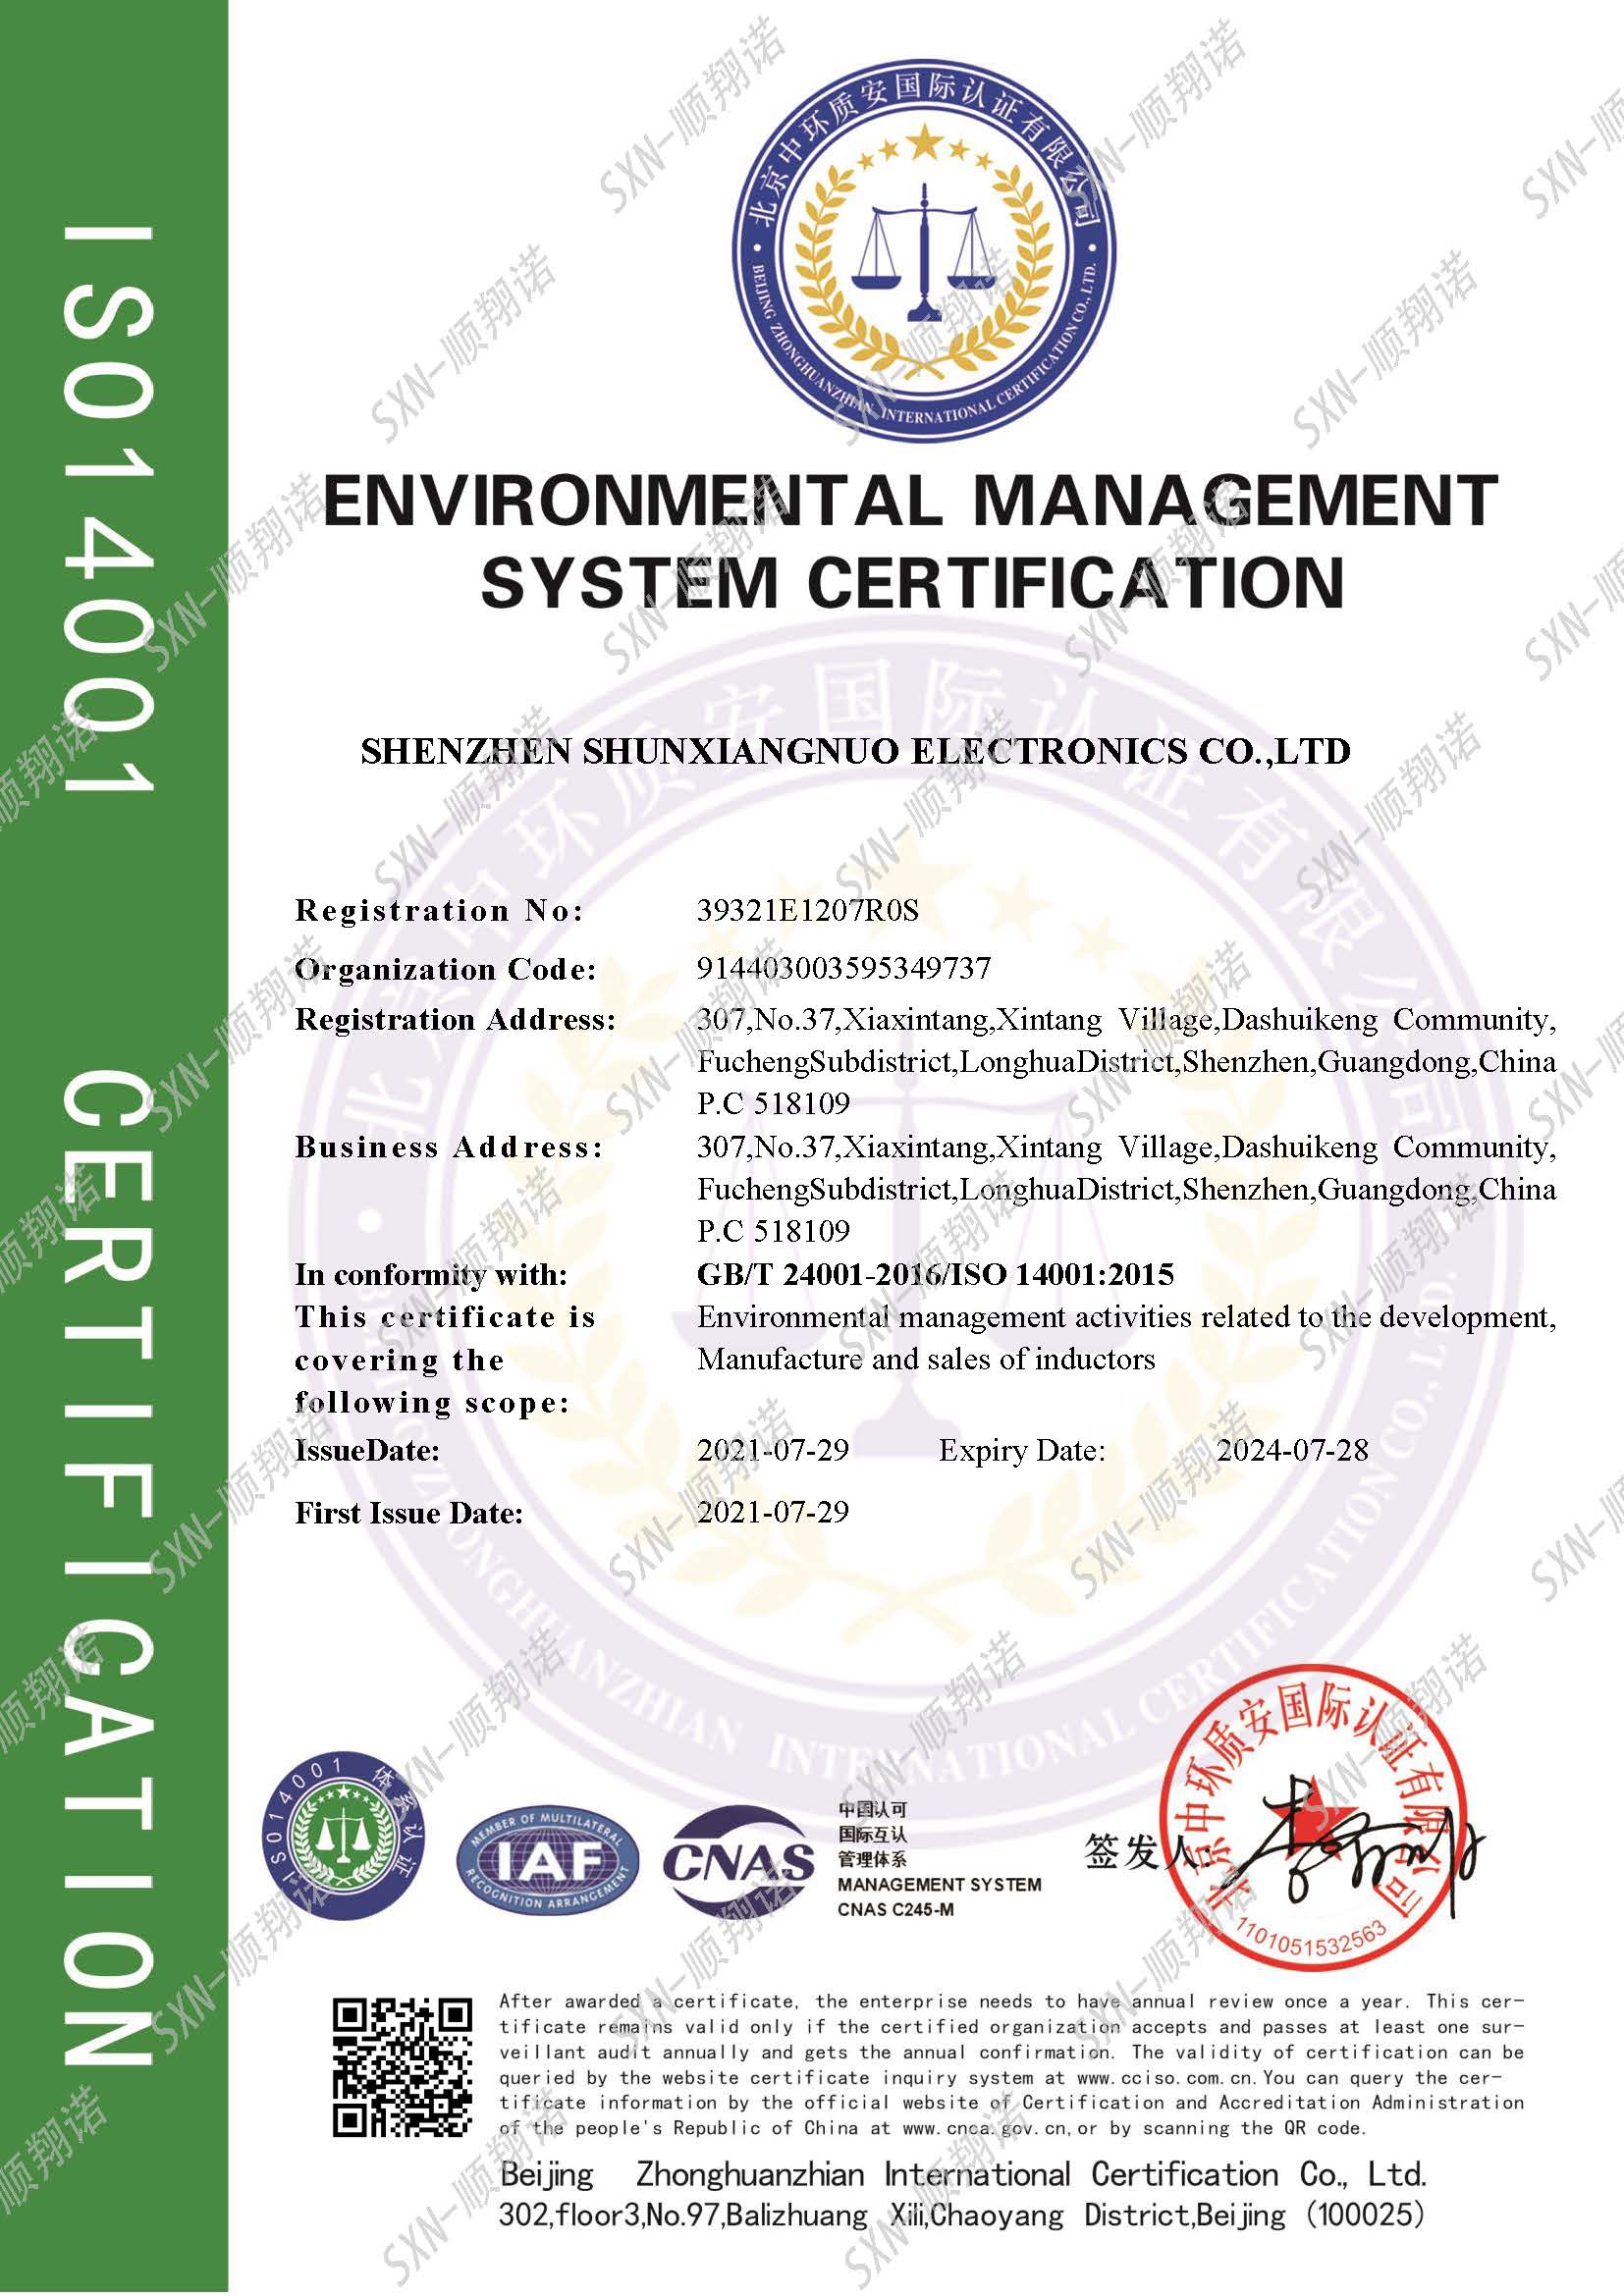 Obtain environmental management system certification